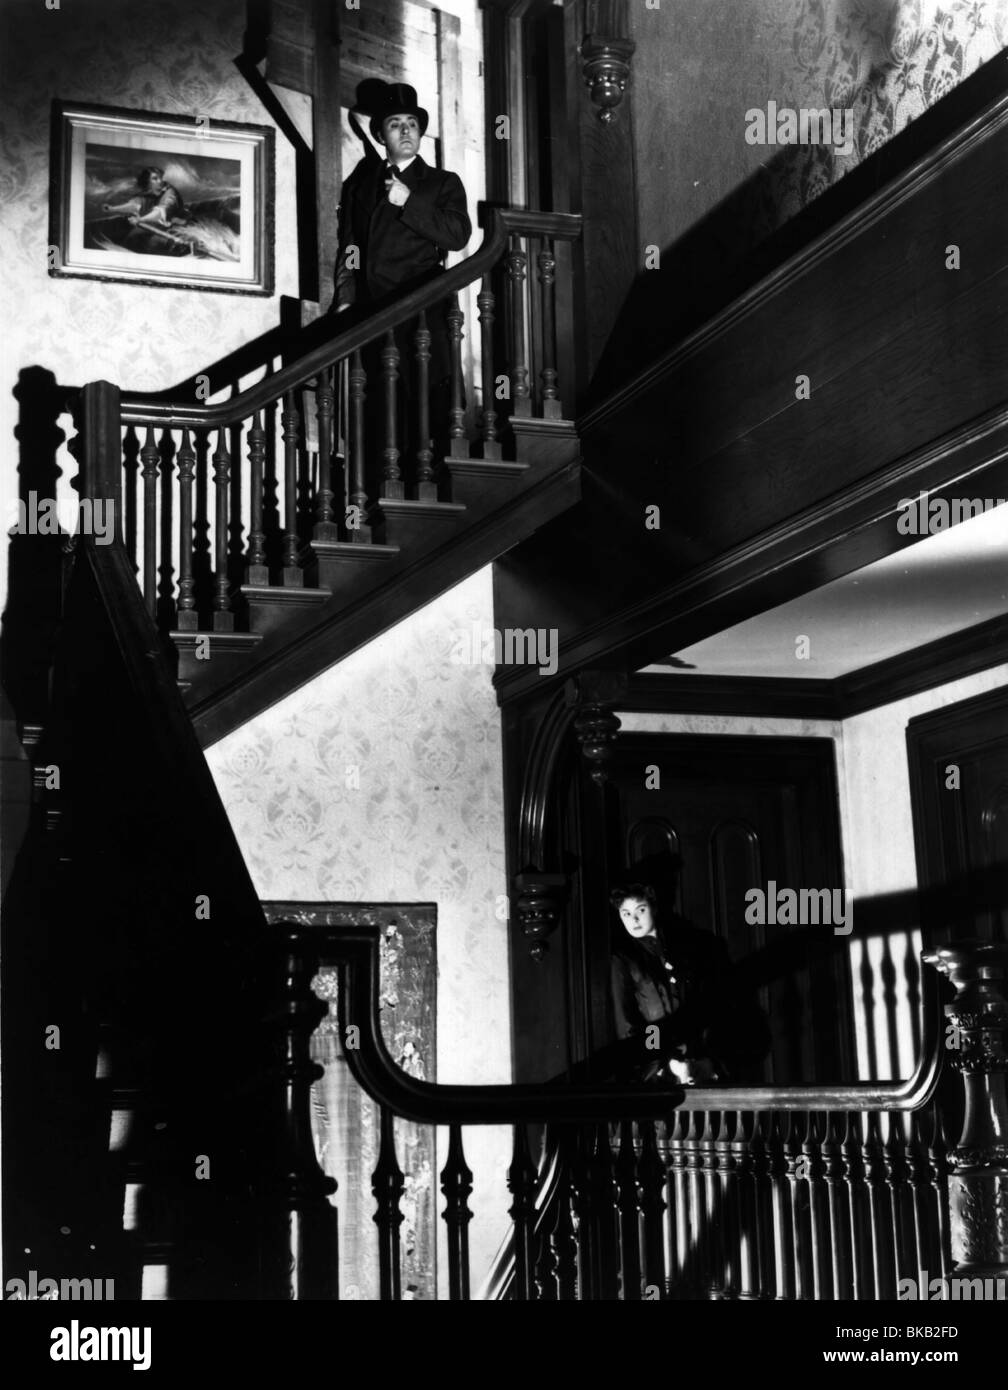 GASLIGHT (1944) CHARLES BOYER, Ingrid Bergman GSL 008P Photo Stock - Alamy